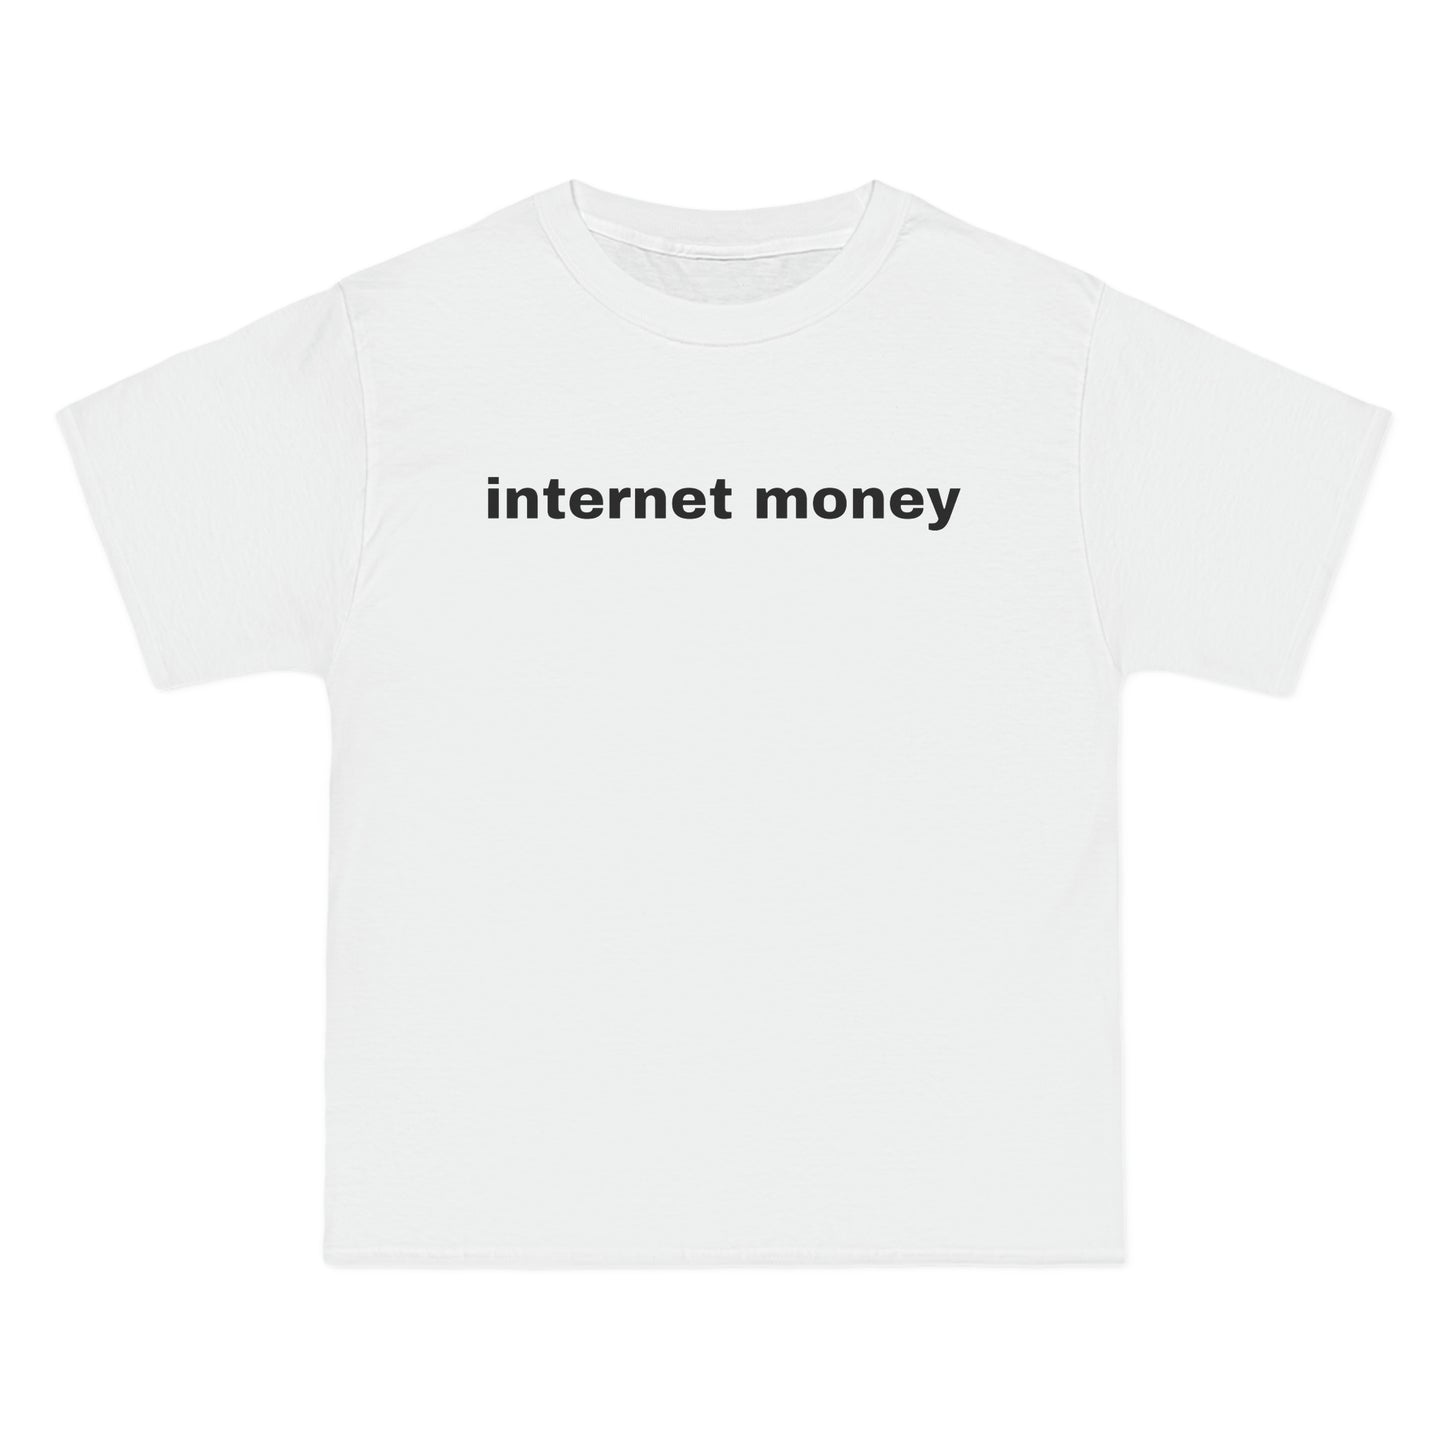 internet money Tee